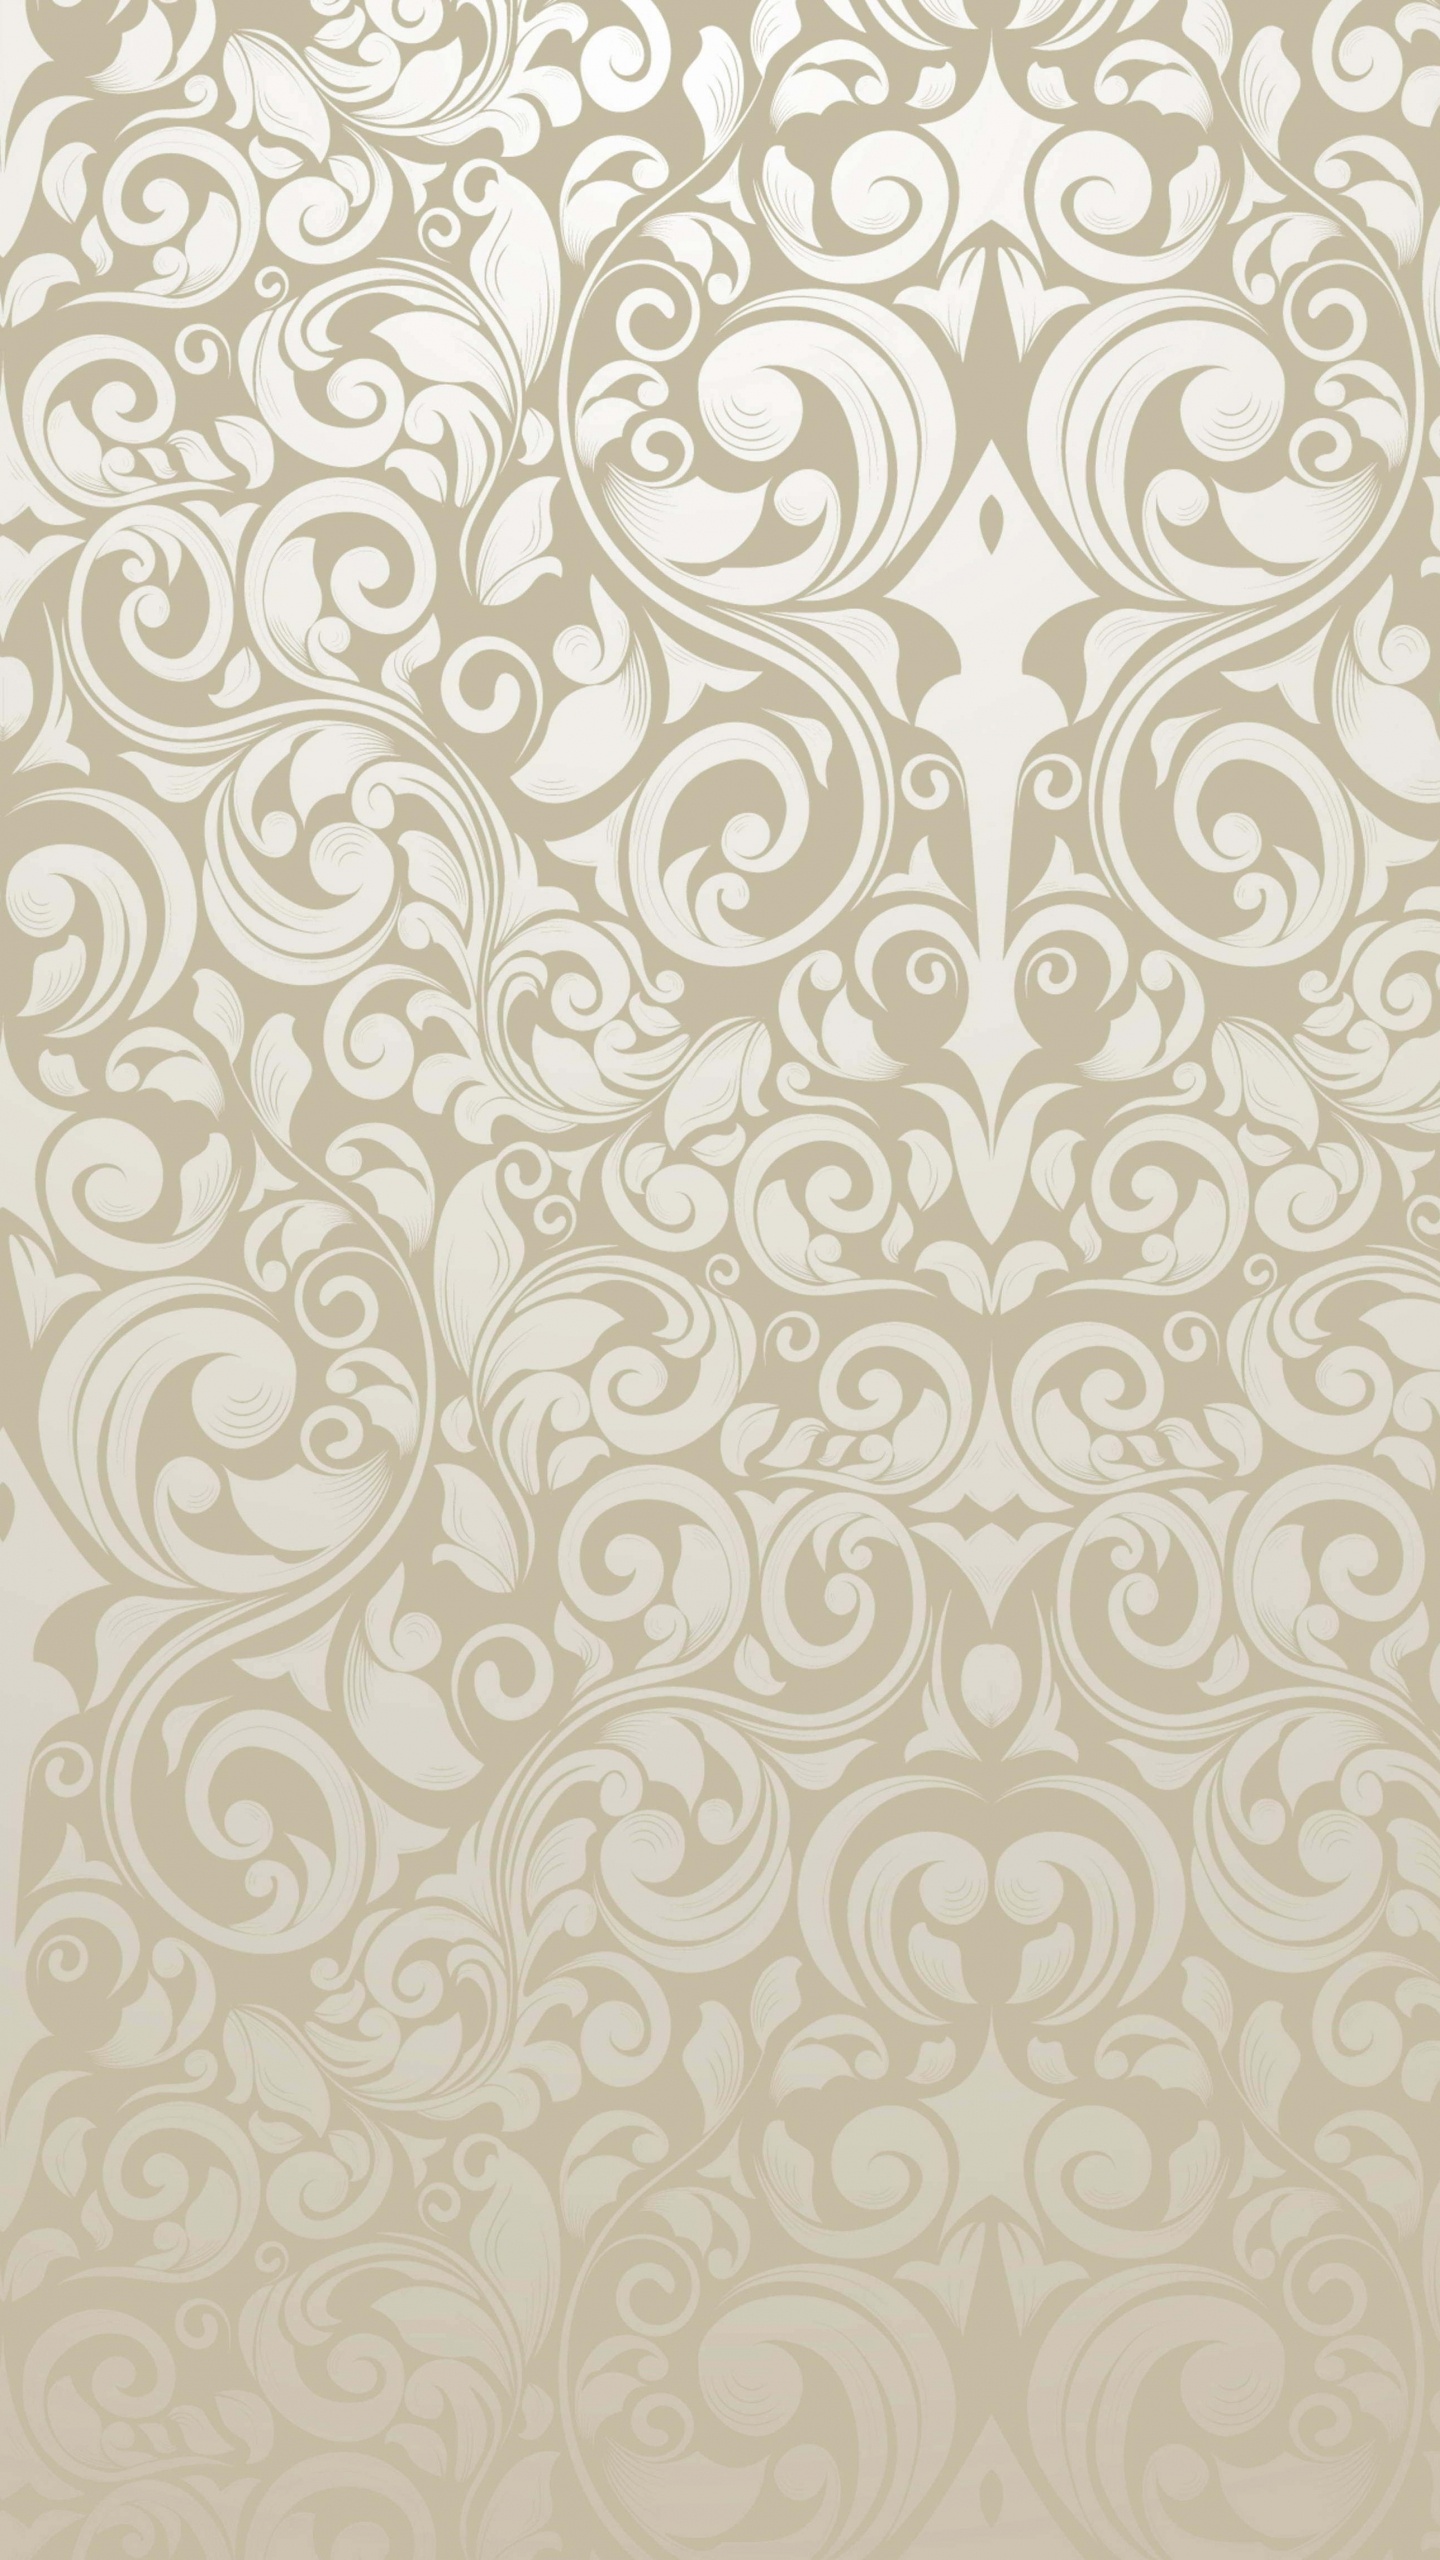 Textil Floral Blanco y Negro. Wallpaper in 1440x2560 Resolution